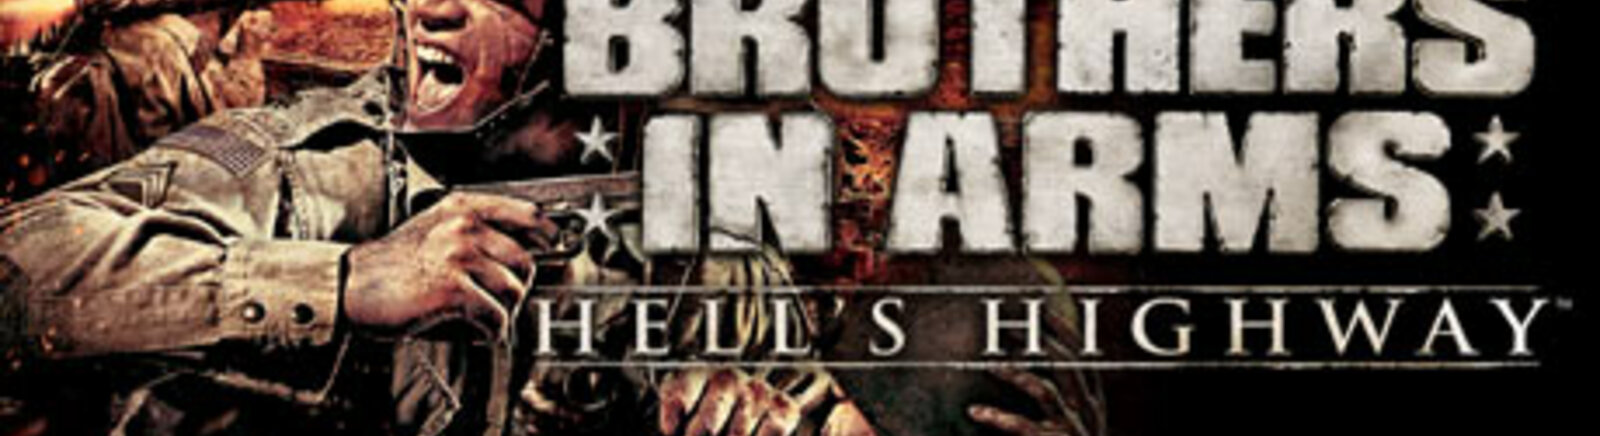 Дата выхода Brothers in Arms: Hell's Highway (Brothers in Arms Hells Highway)  на PC, PS3 и Xbox 360 в России и во всем мире